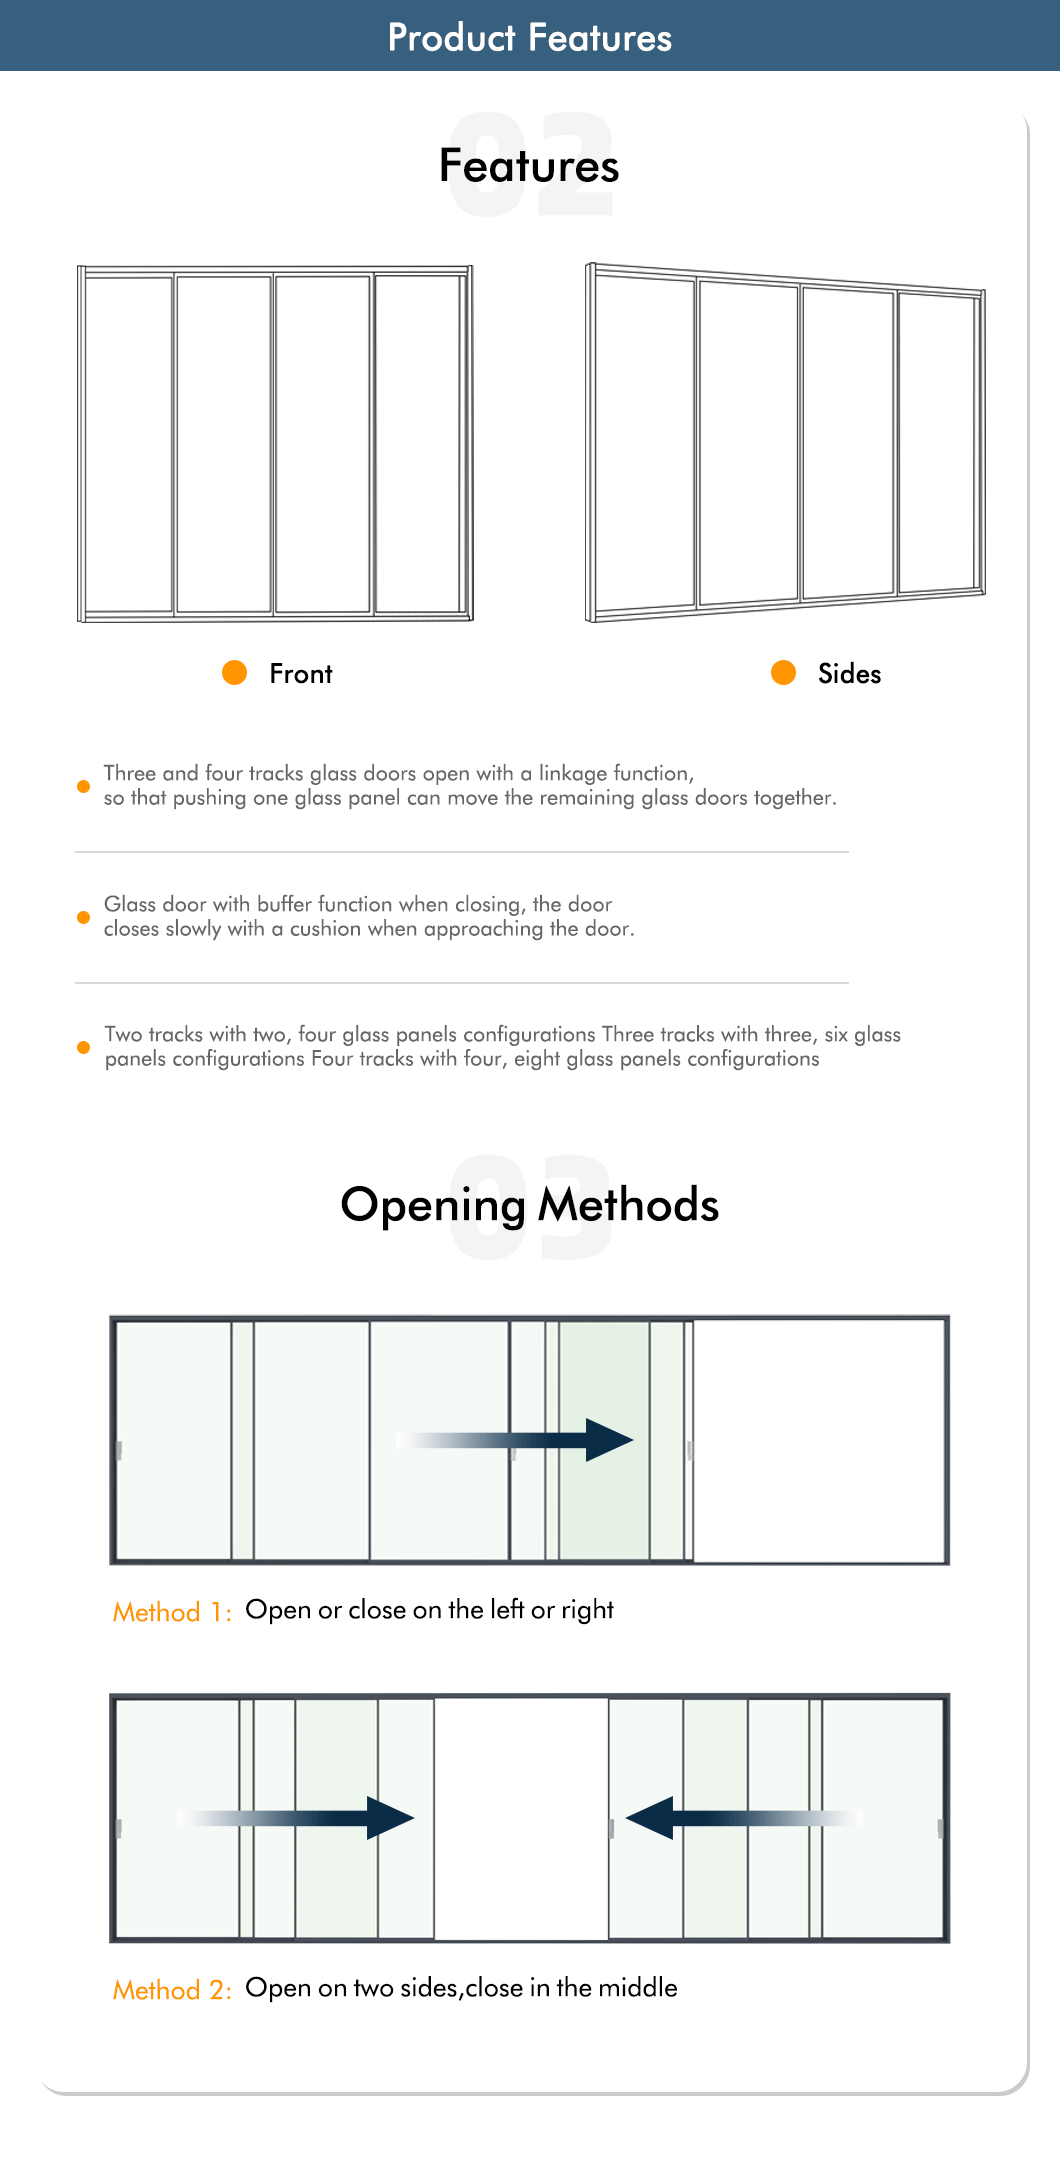 AlunoTec Elevate Modern Spaces Glass Heightens Safety Ultra-slim Framed Sliding Glass Door 